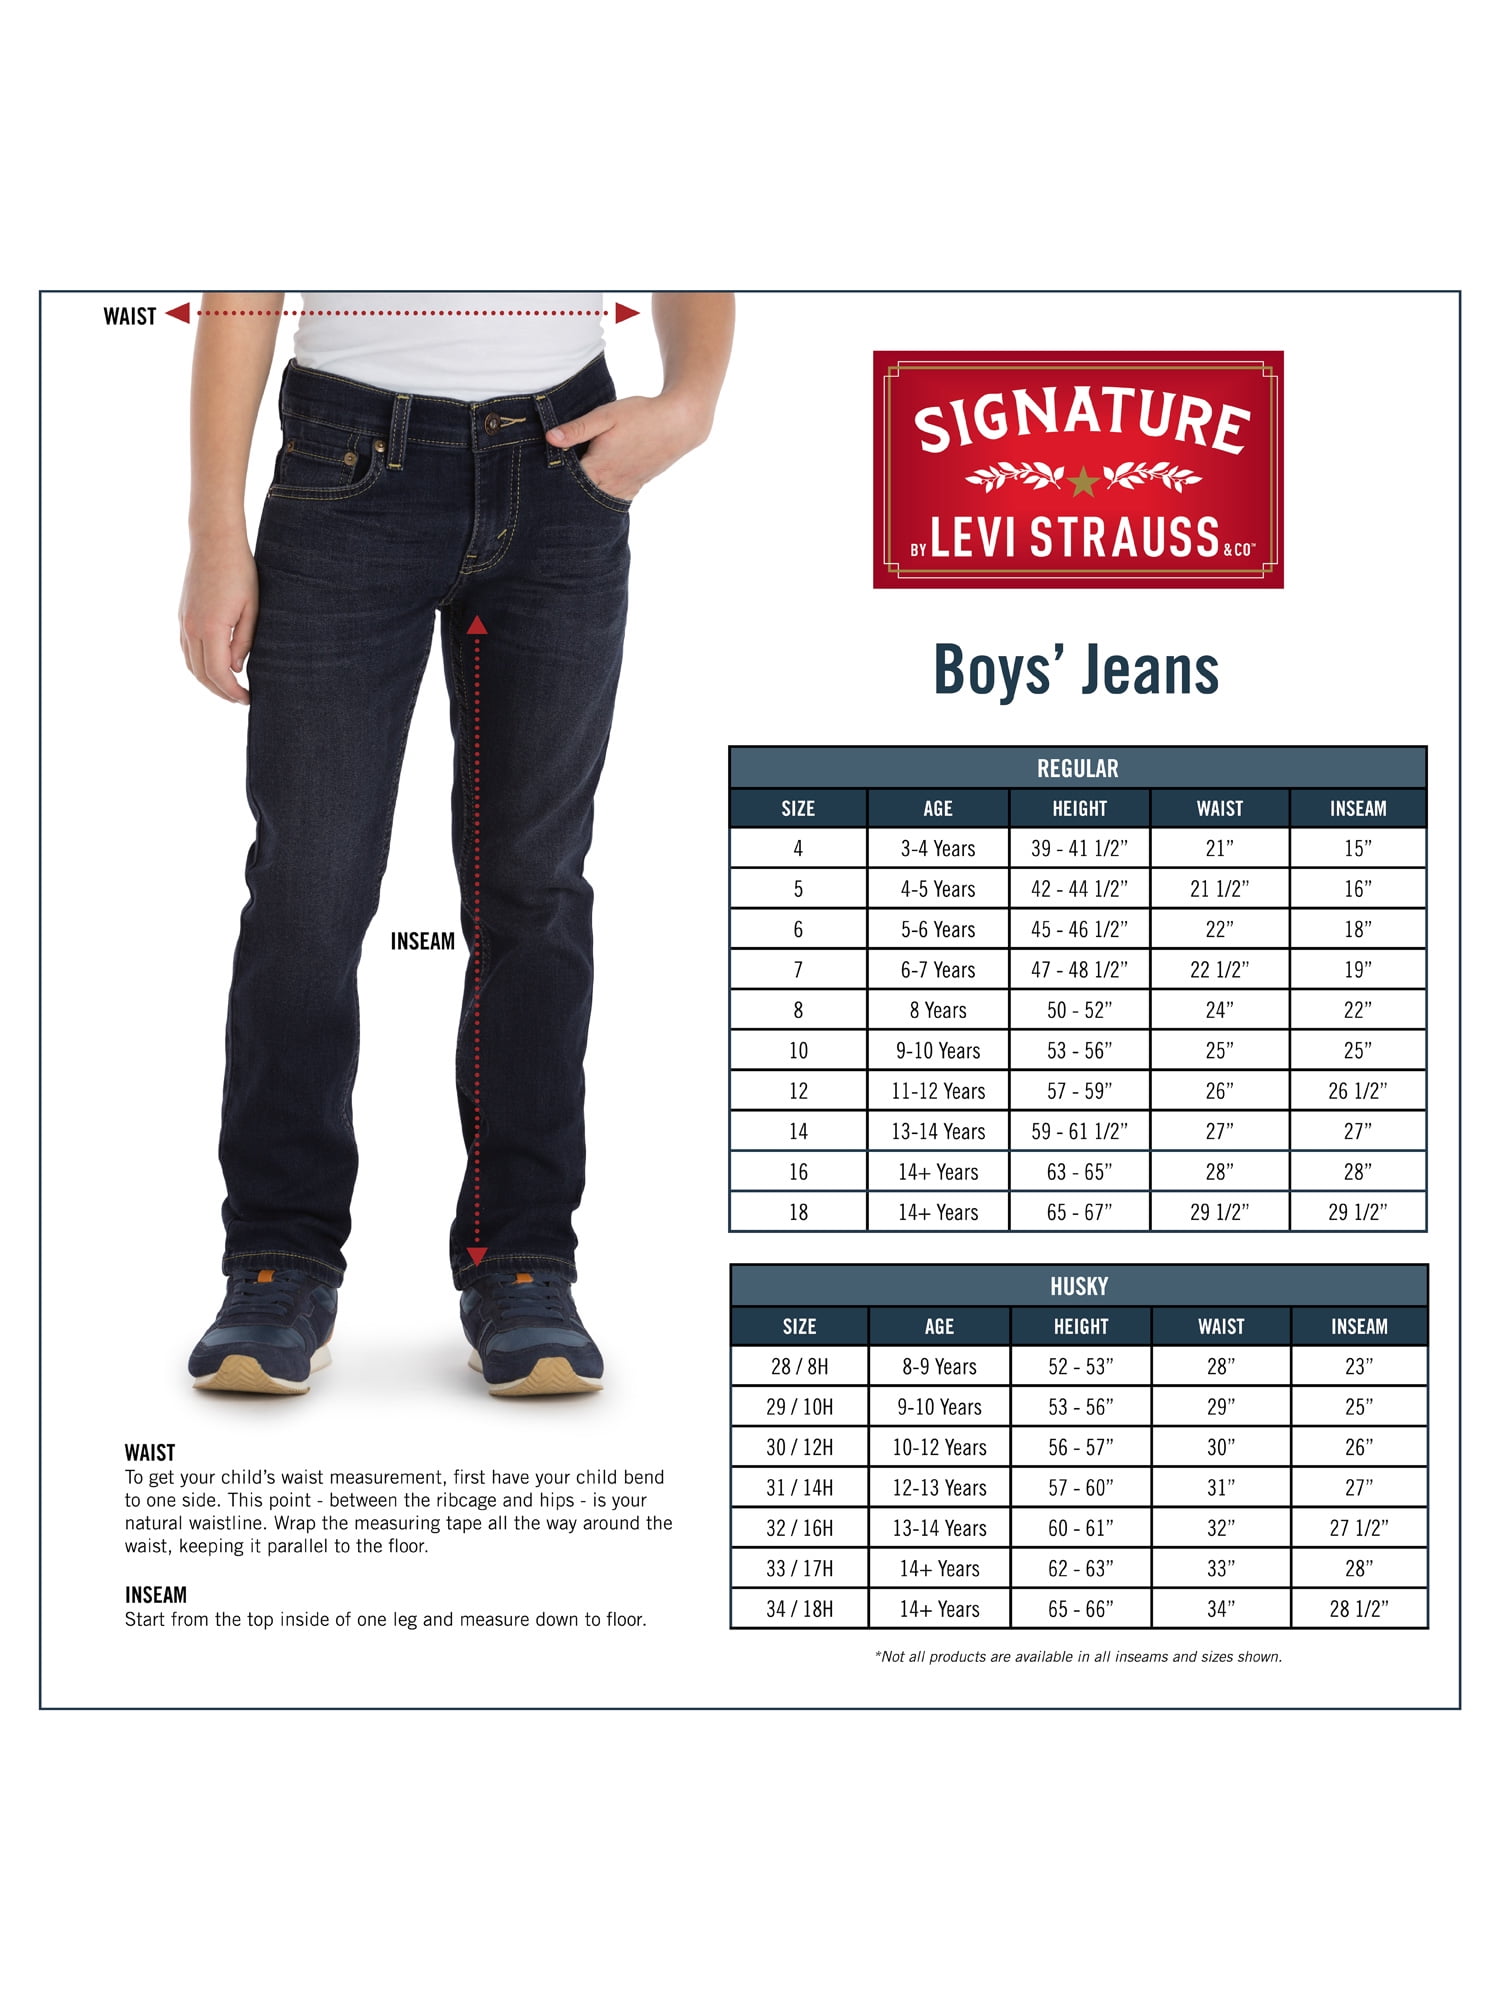 levi strauss jeans size chart